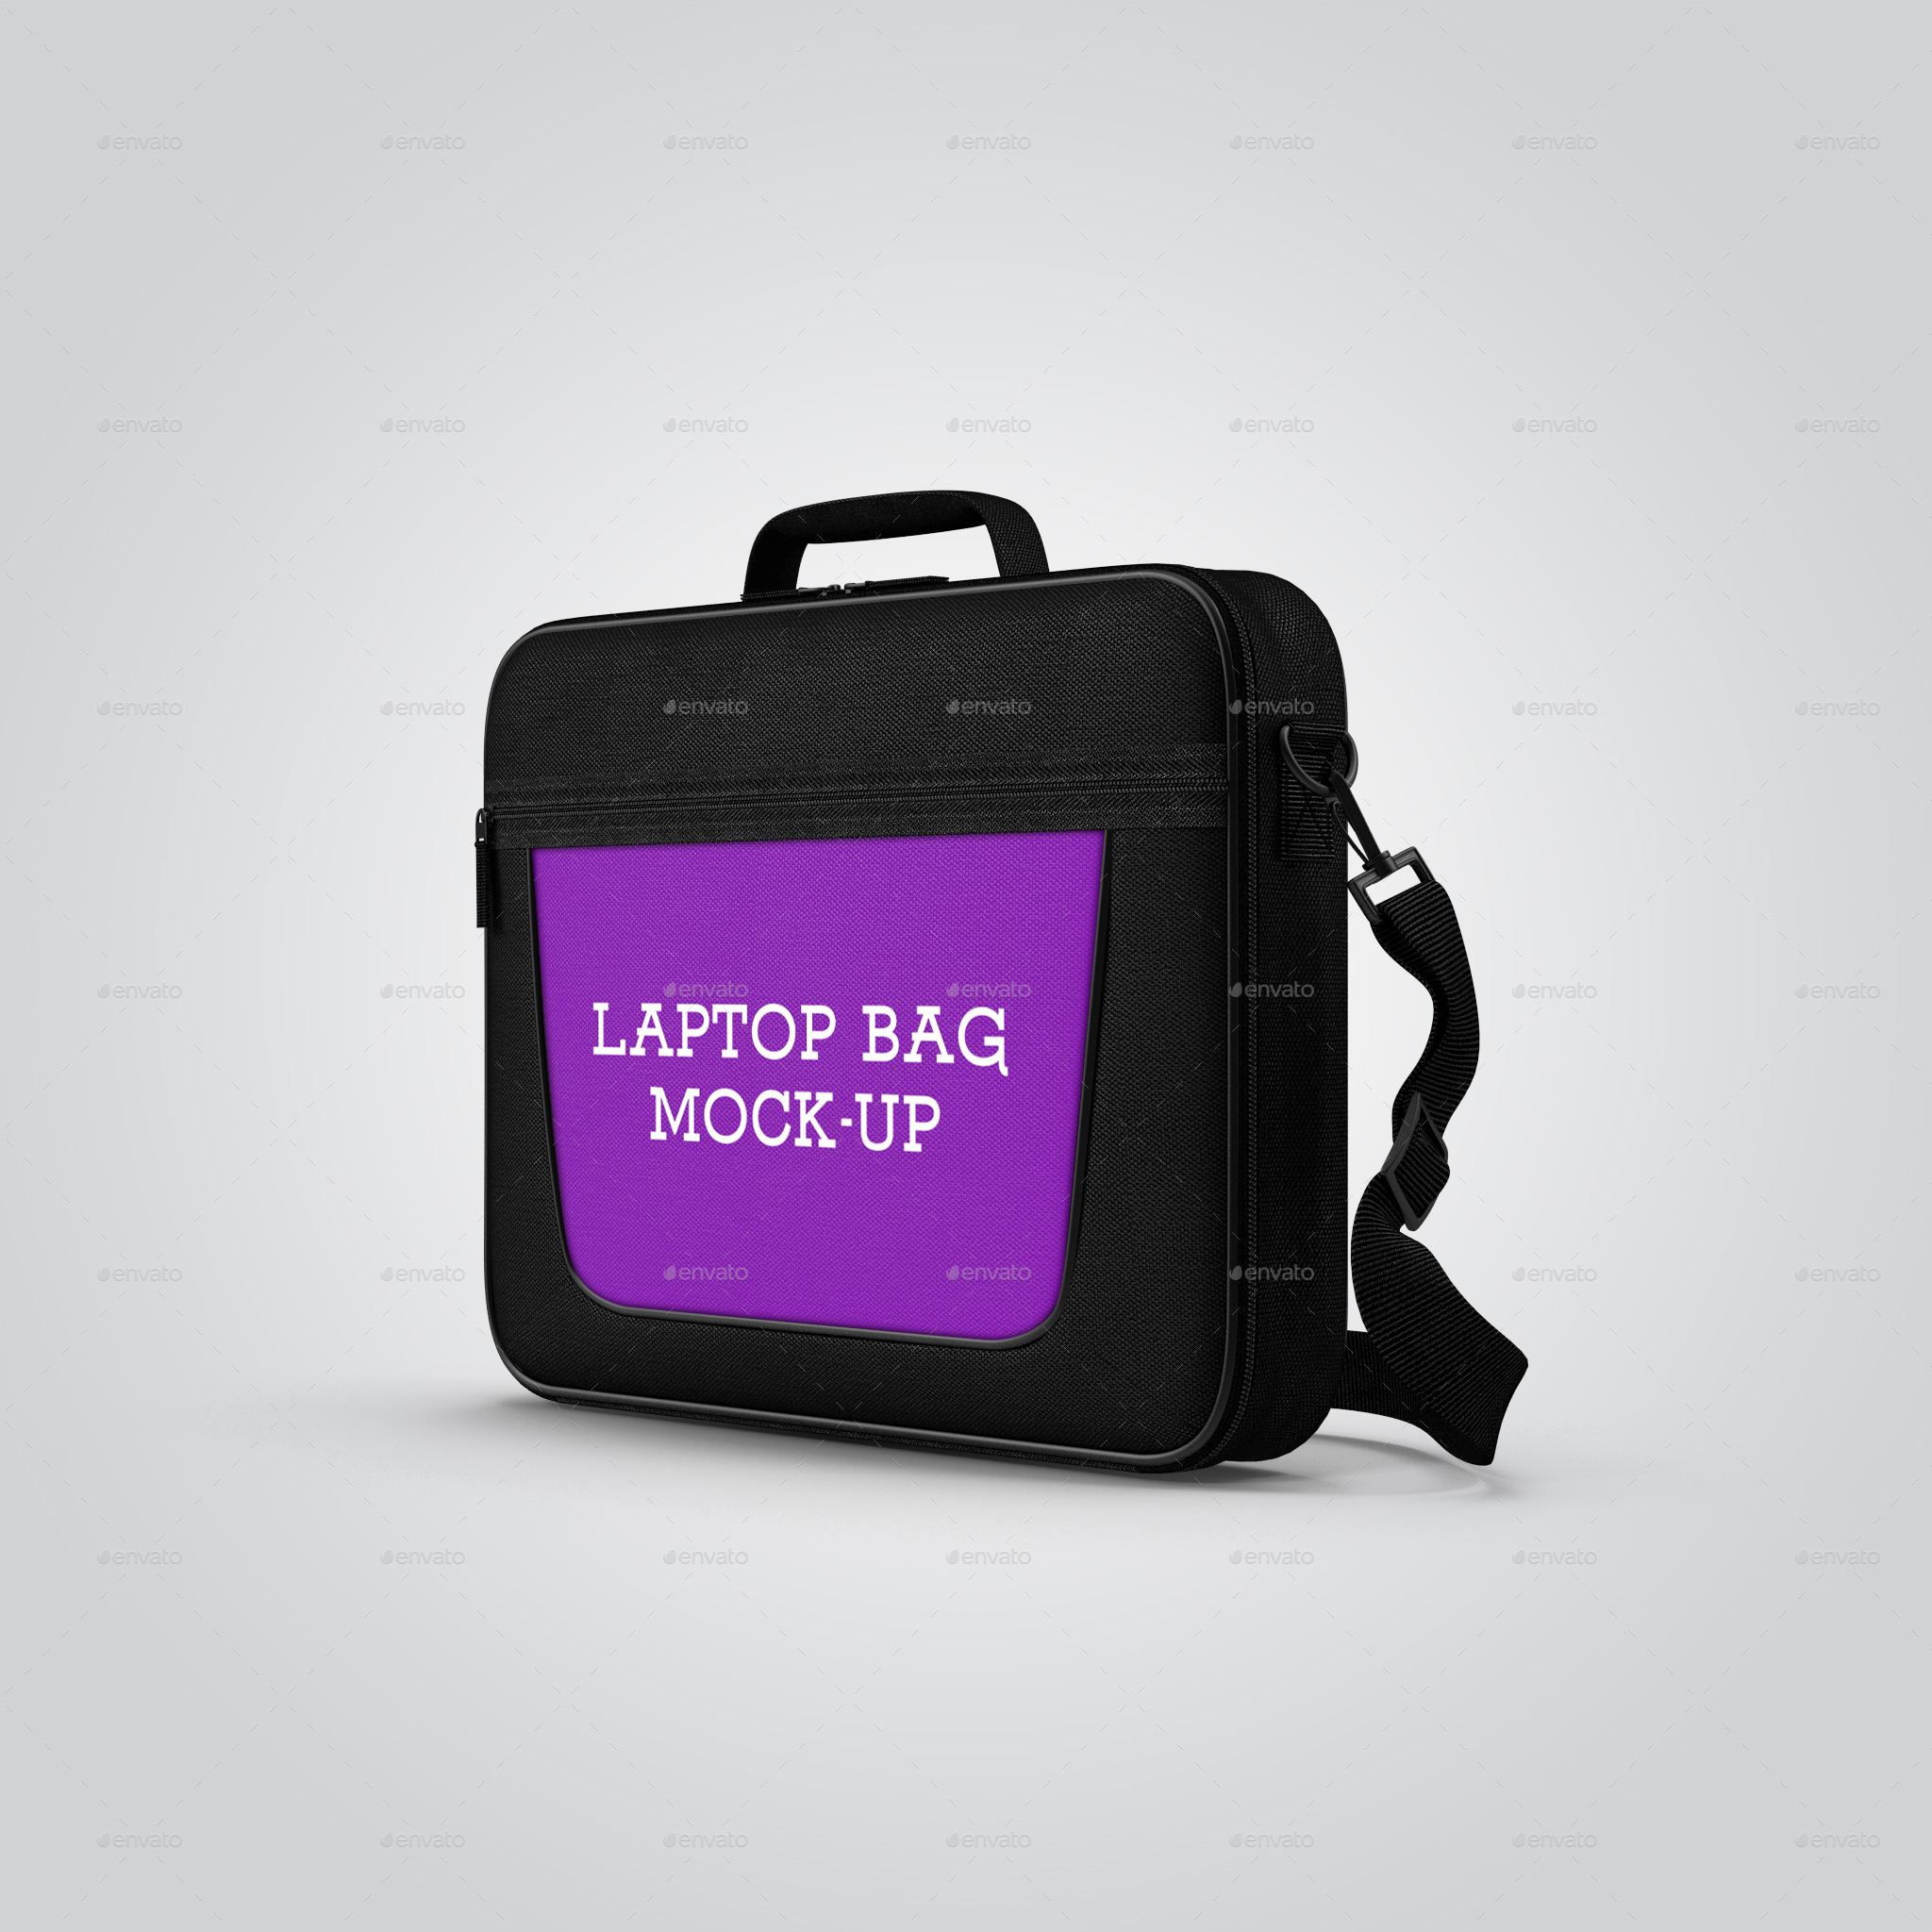 Download Laptop Bag Mockup by nashetyakoub | GraphicRiver